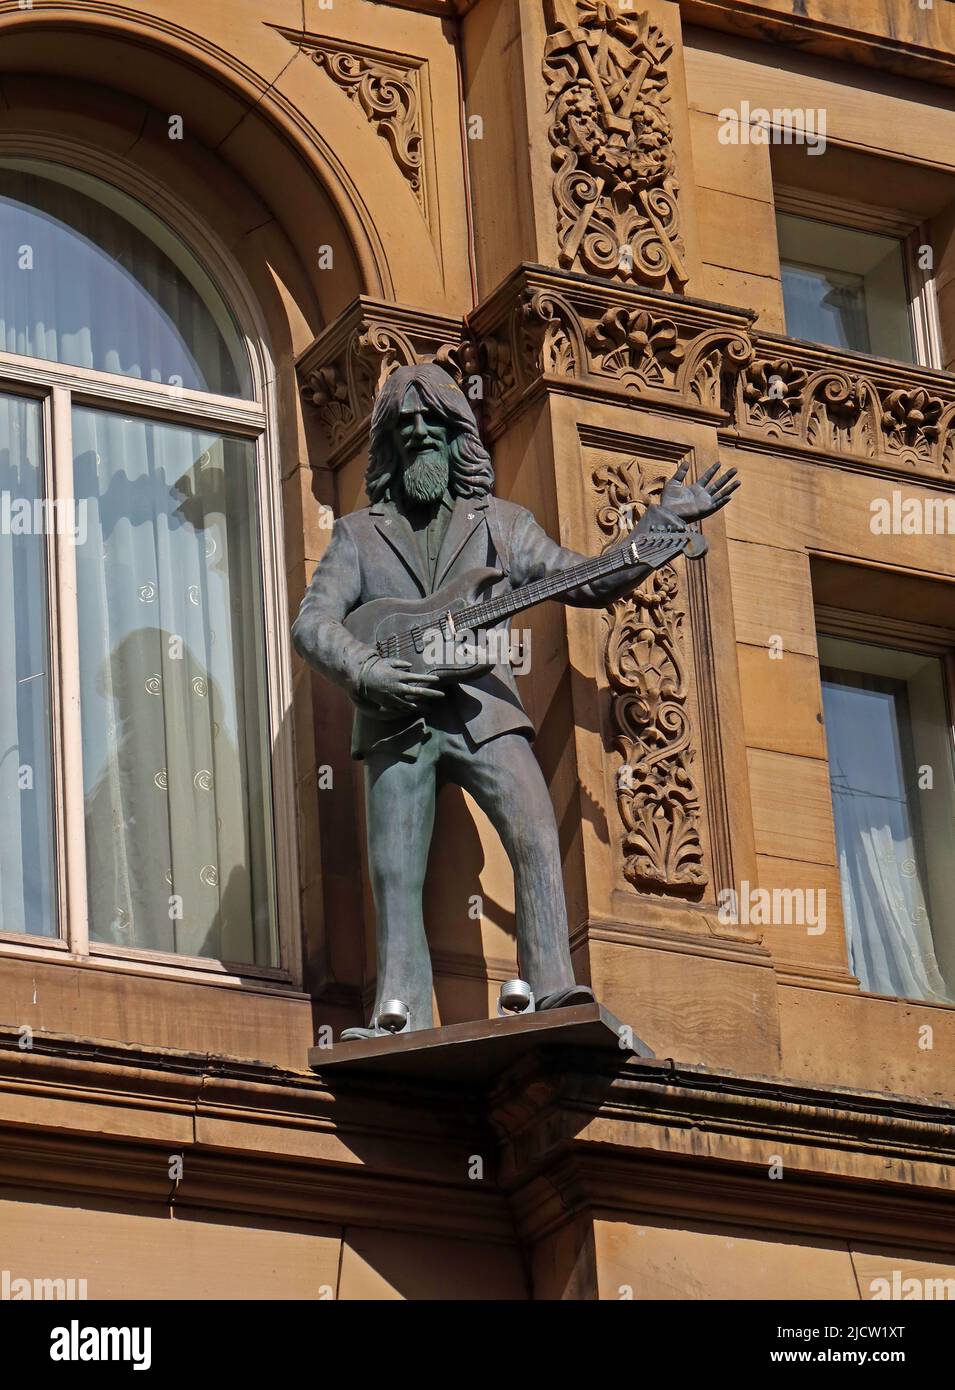 George Harrison - le statue dei Liverpool Beatle - i Fab Four, intorno all'esterno dell'Hard Day's Night Hotel, Central Buildings, N John St, Liverpool L2 6RR Foto Stock